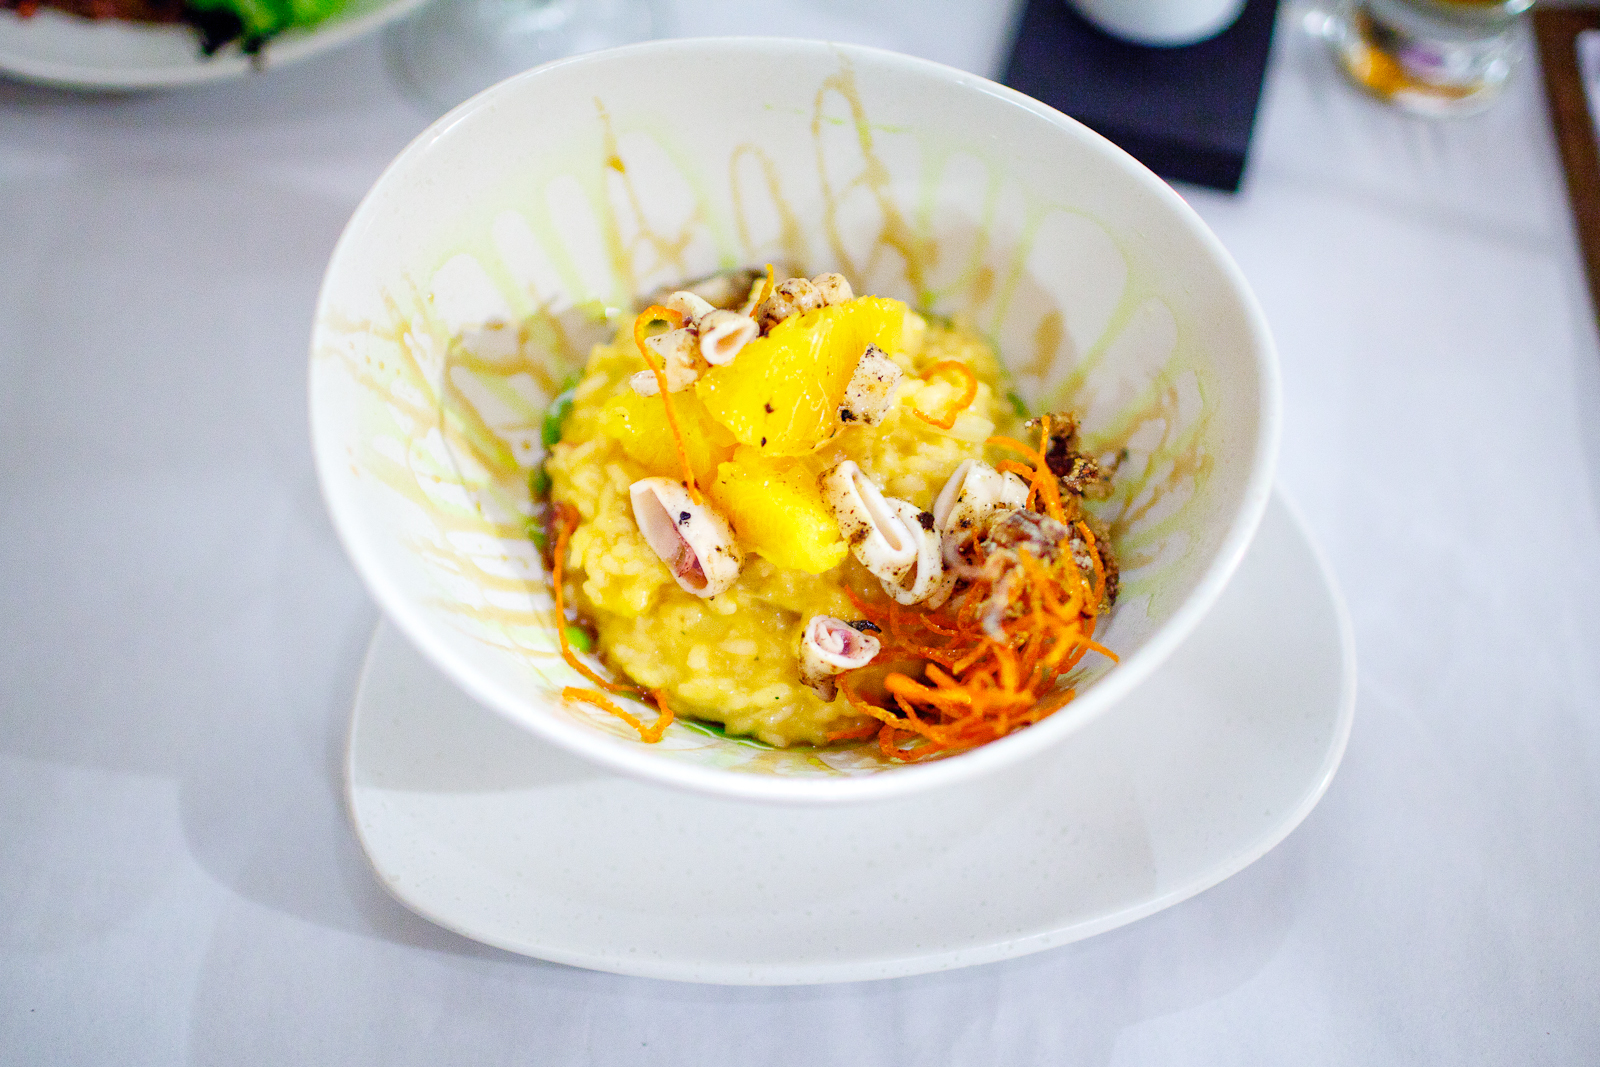 Risotto de mandarina y calmar (Mandarin orange risotto with octopus) ($120 MXP)